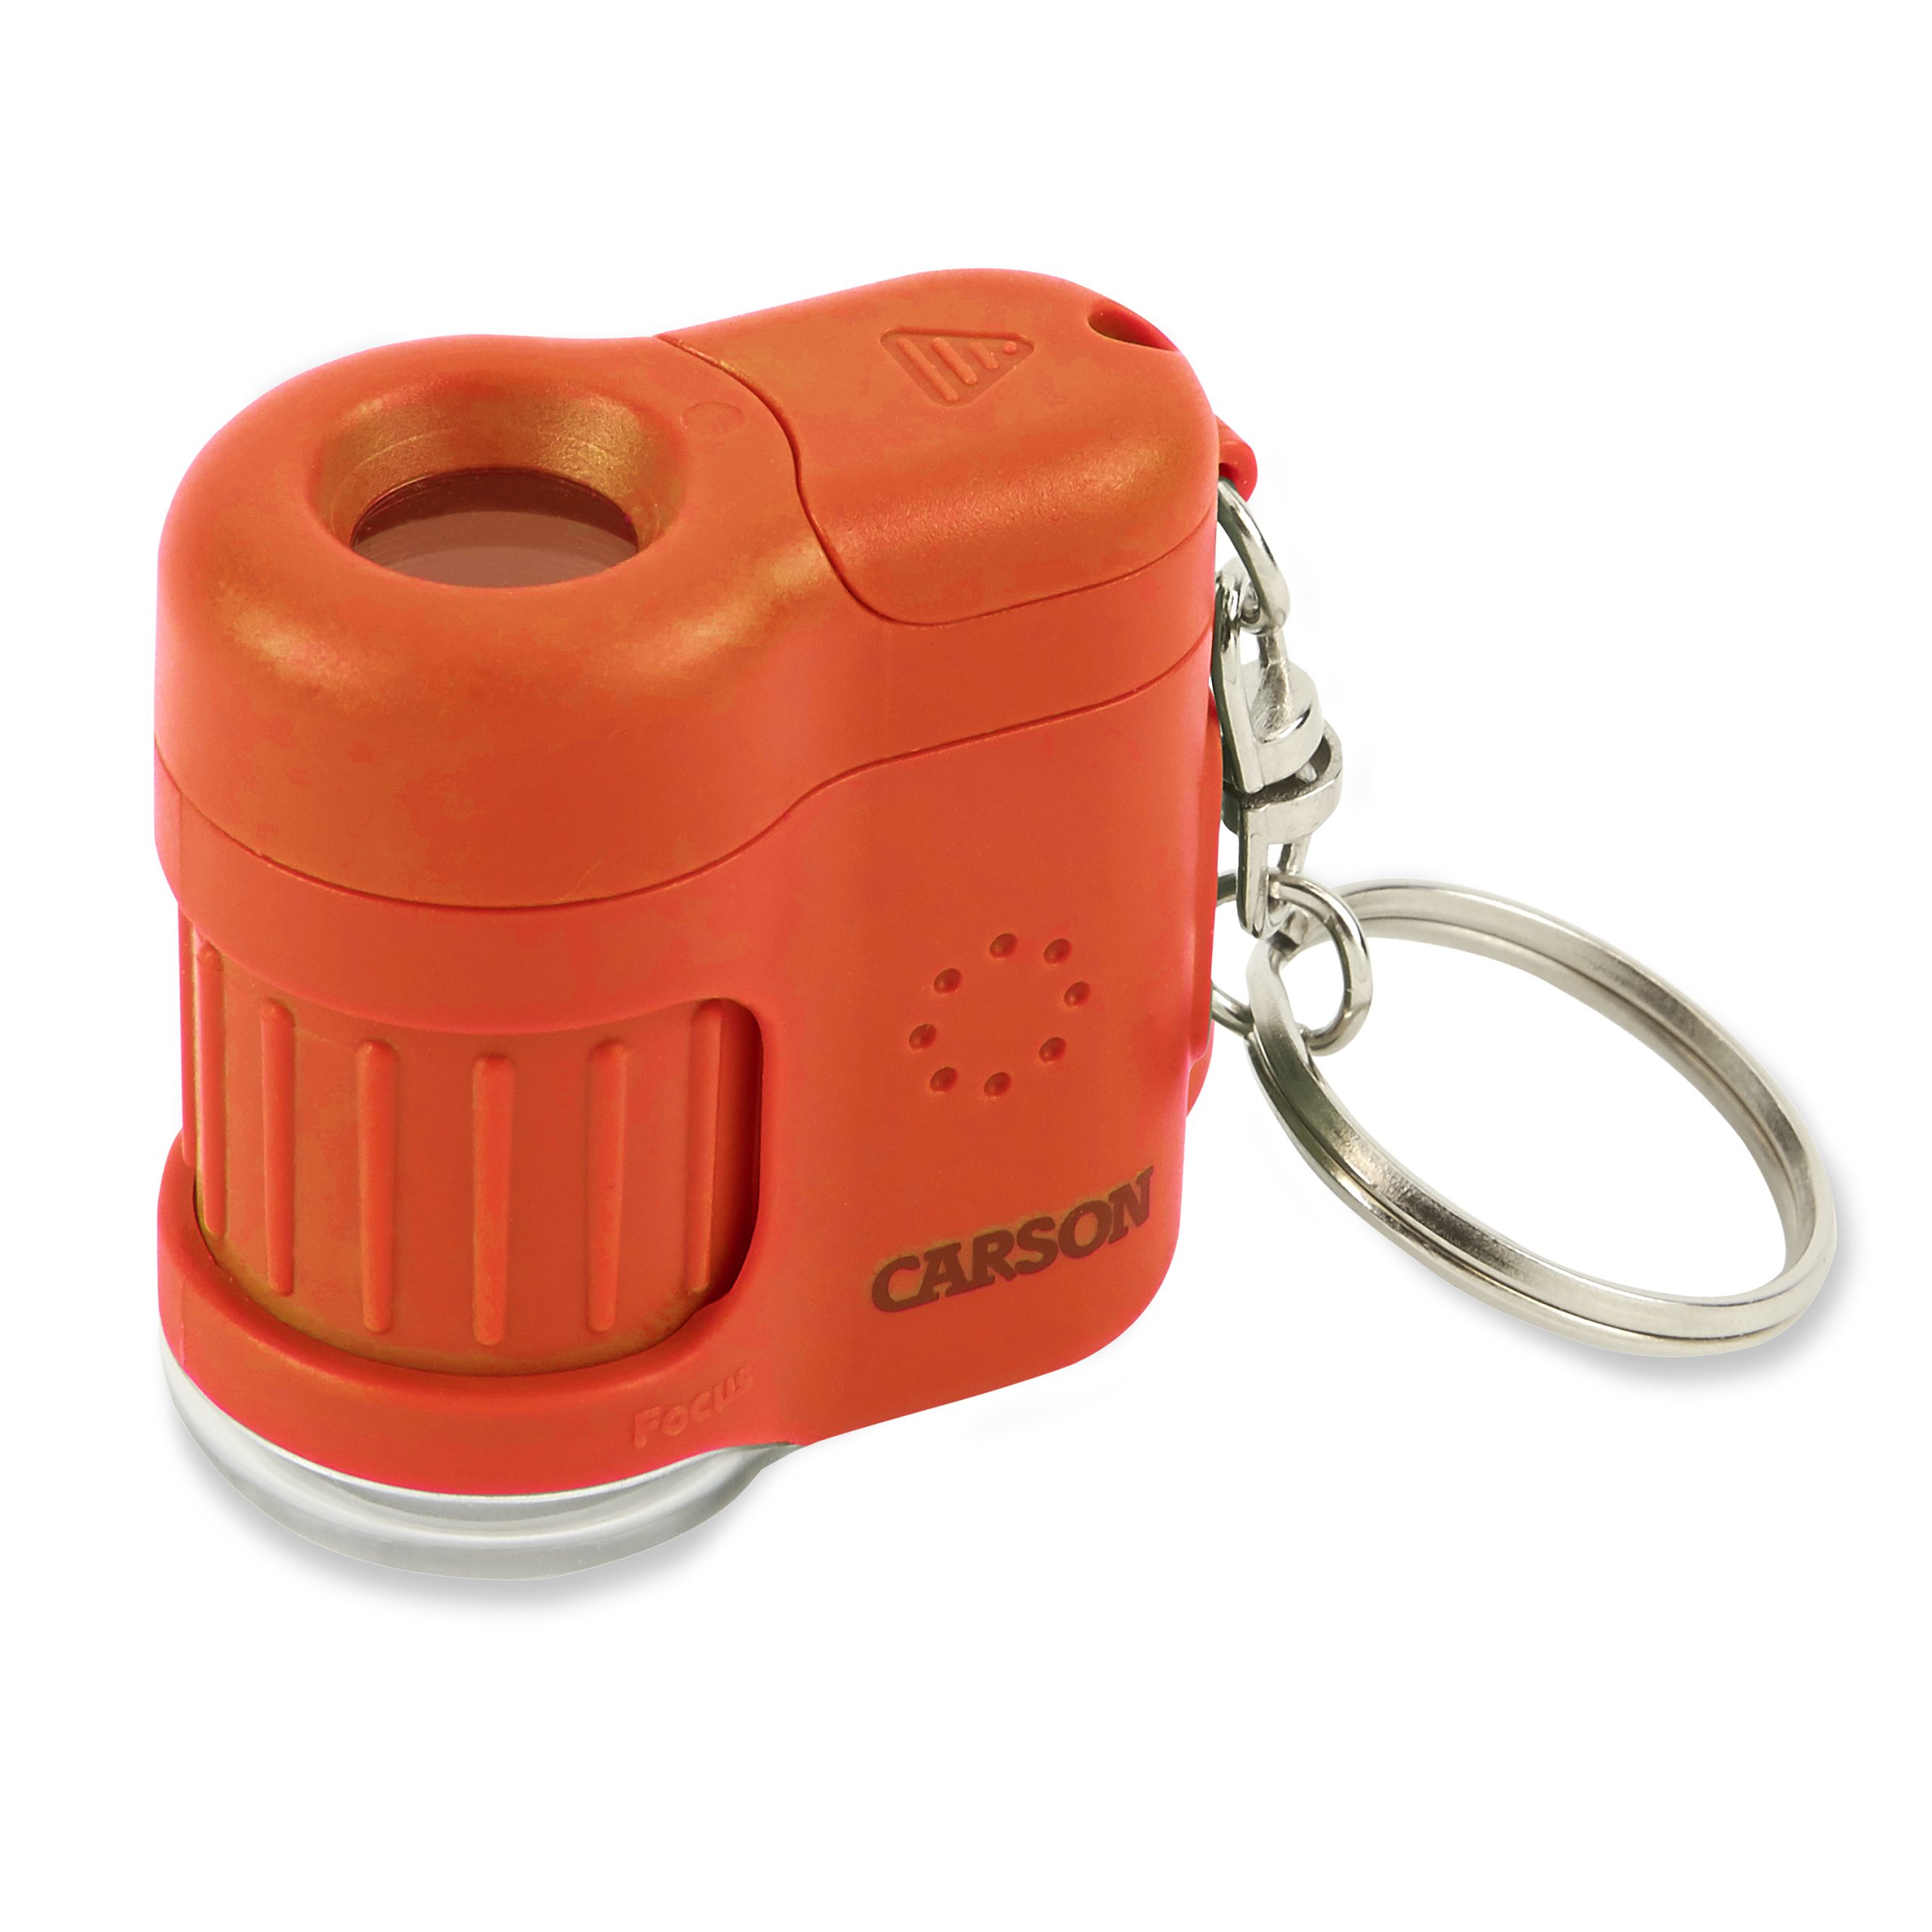 Carson Micro Mini LED 20x Pocket Microscope with Built-In UV Light Orange UK 